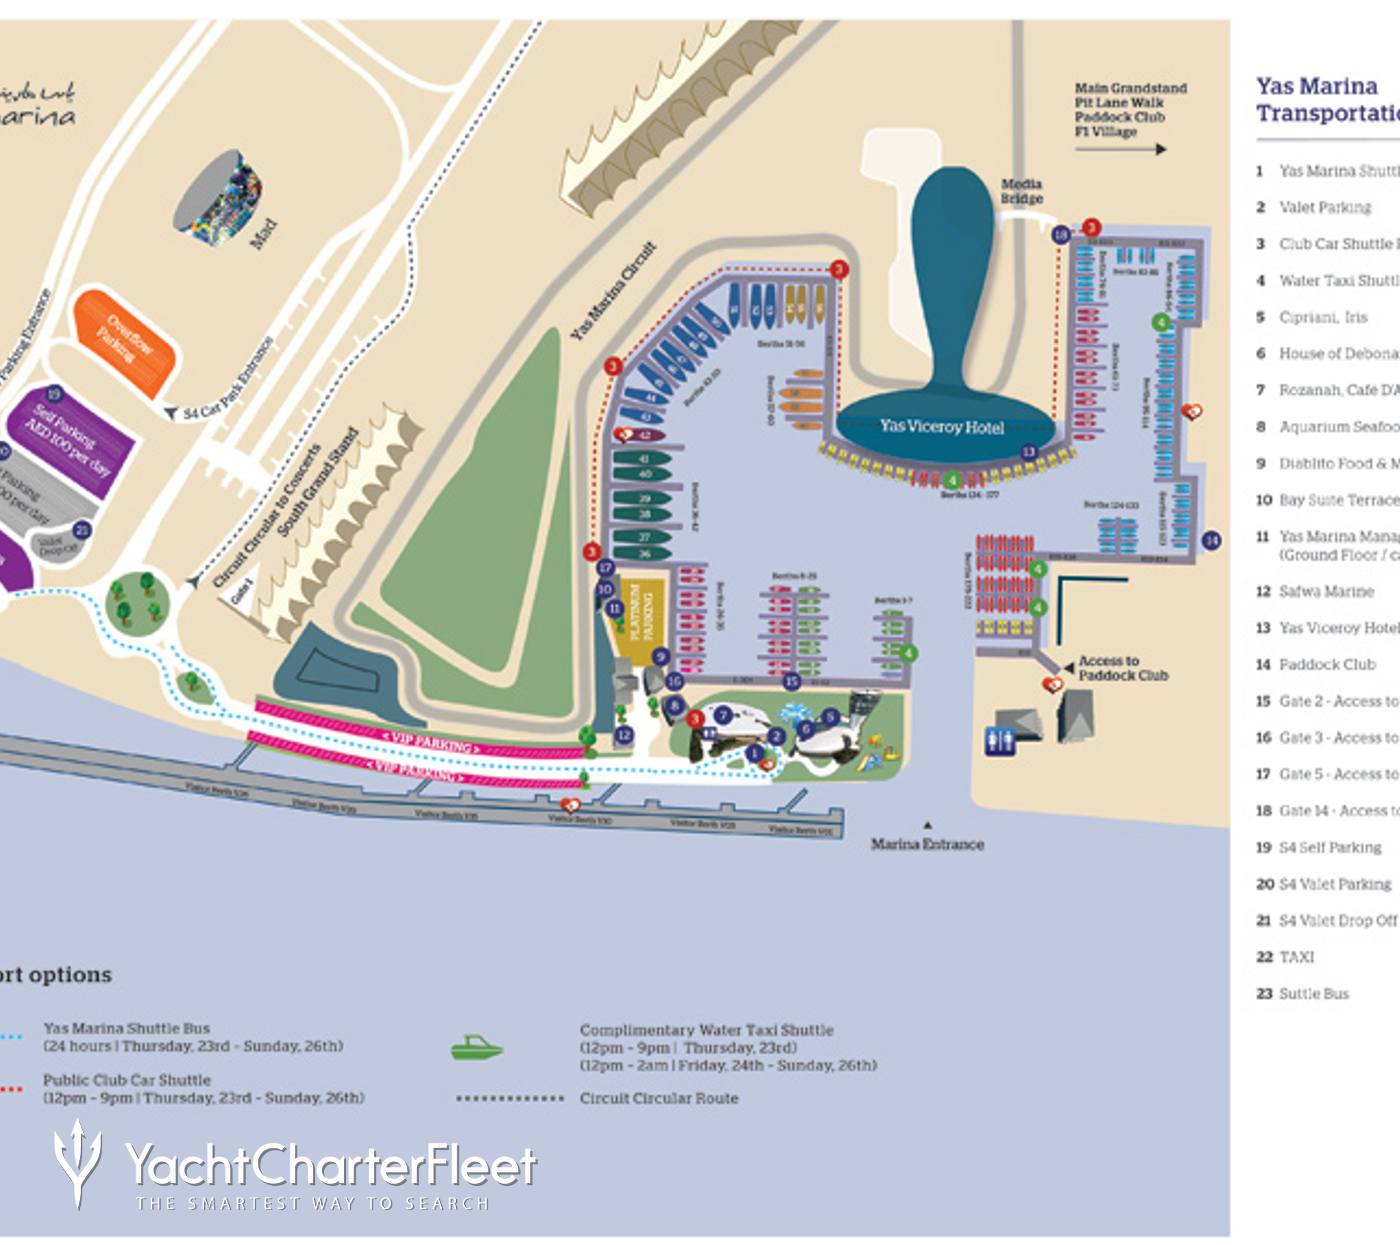 Finding Your Way Around Yas Marina Yacht Charter Fleet